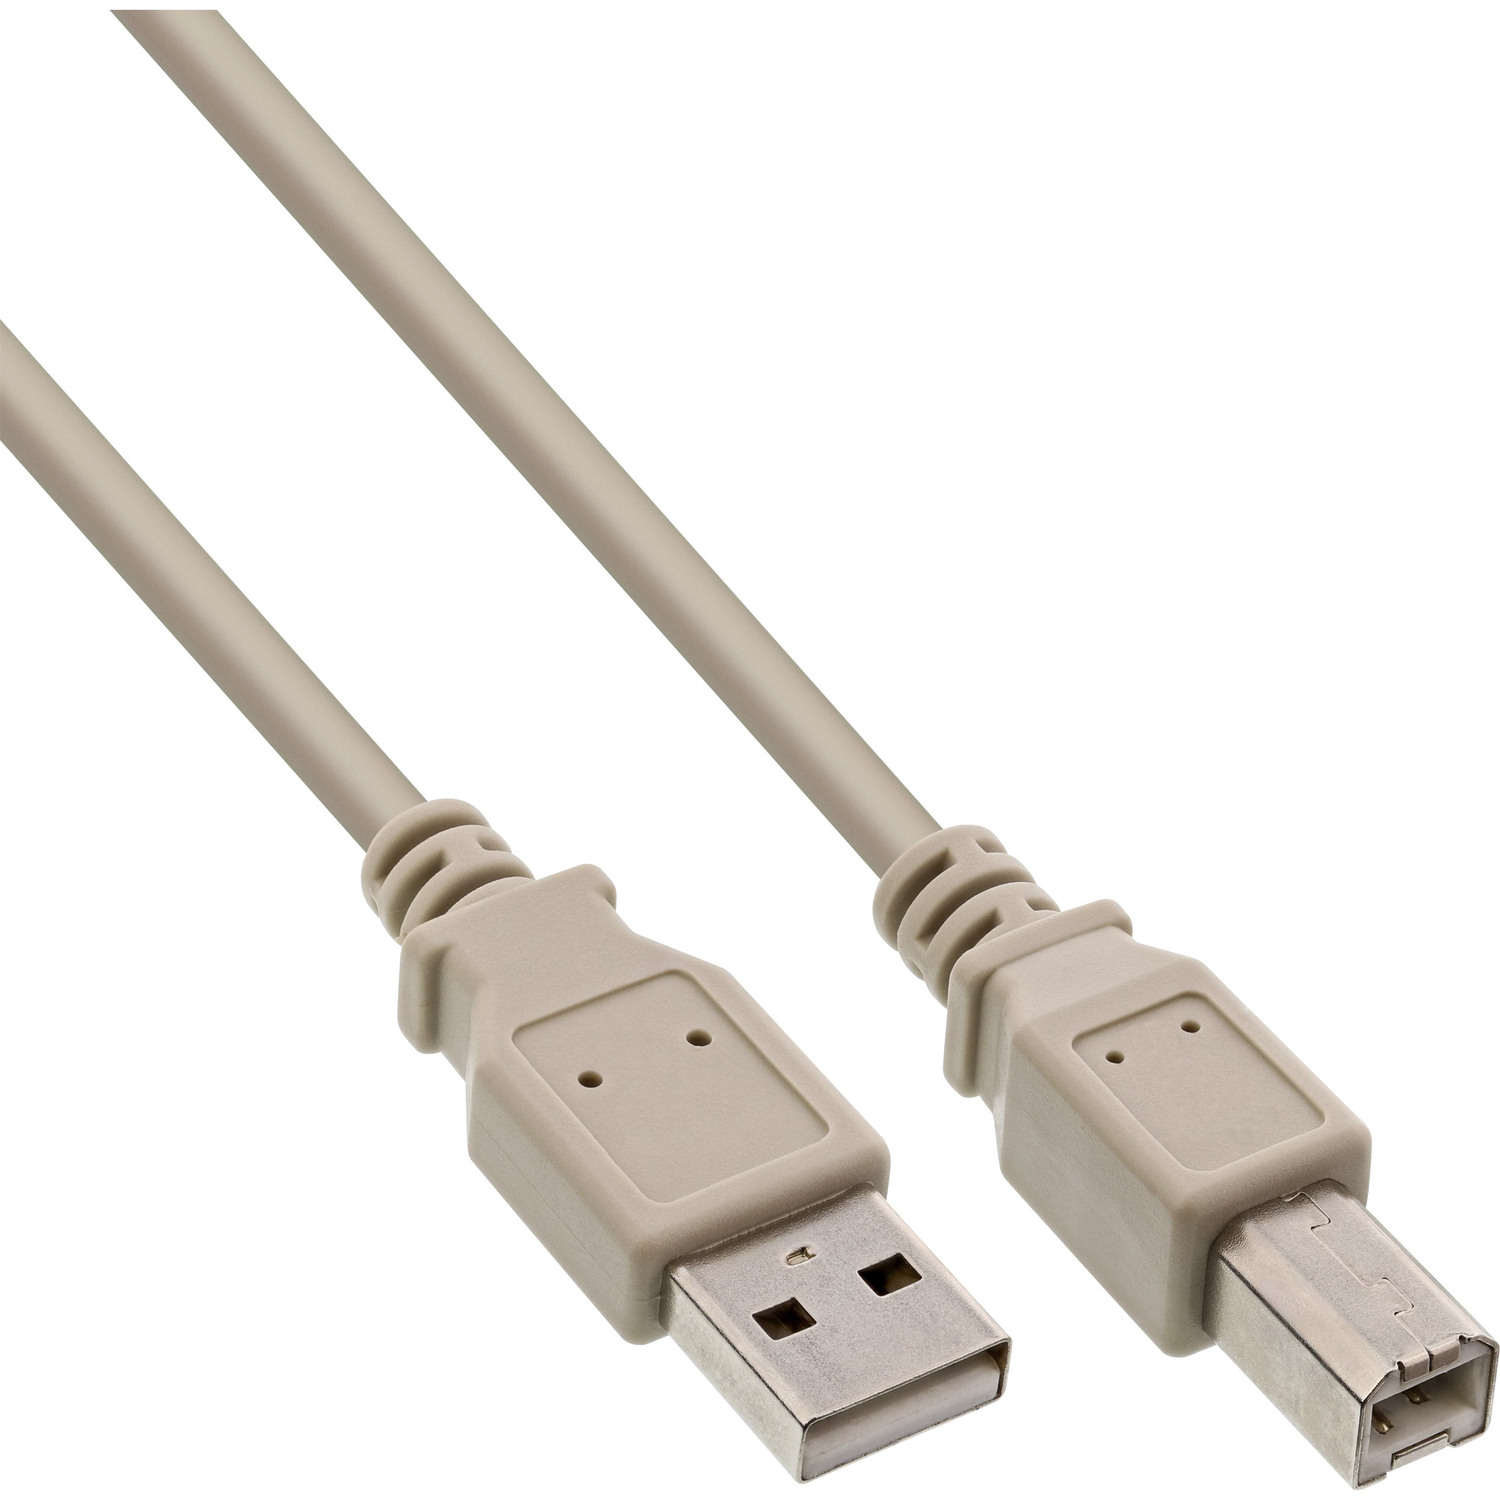 A USB Kabel USB INLINE Kabel, InLine® 0,5m beige, USB B, an USB 2.0 2.0